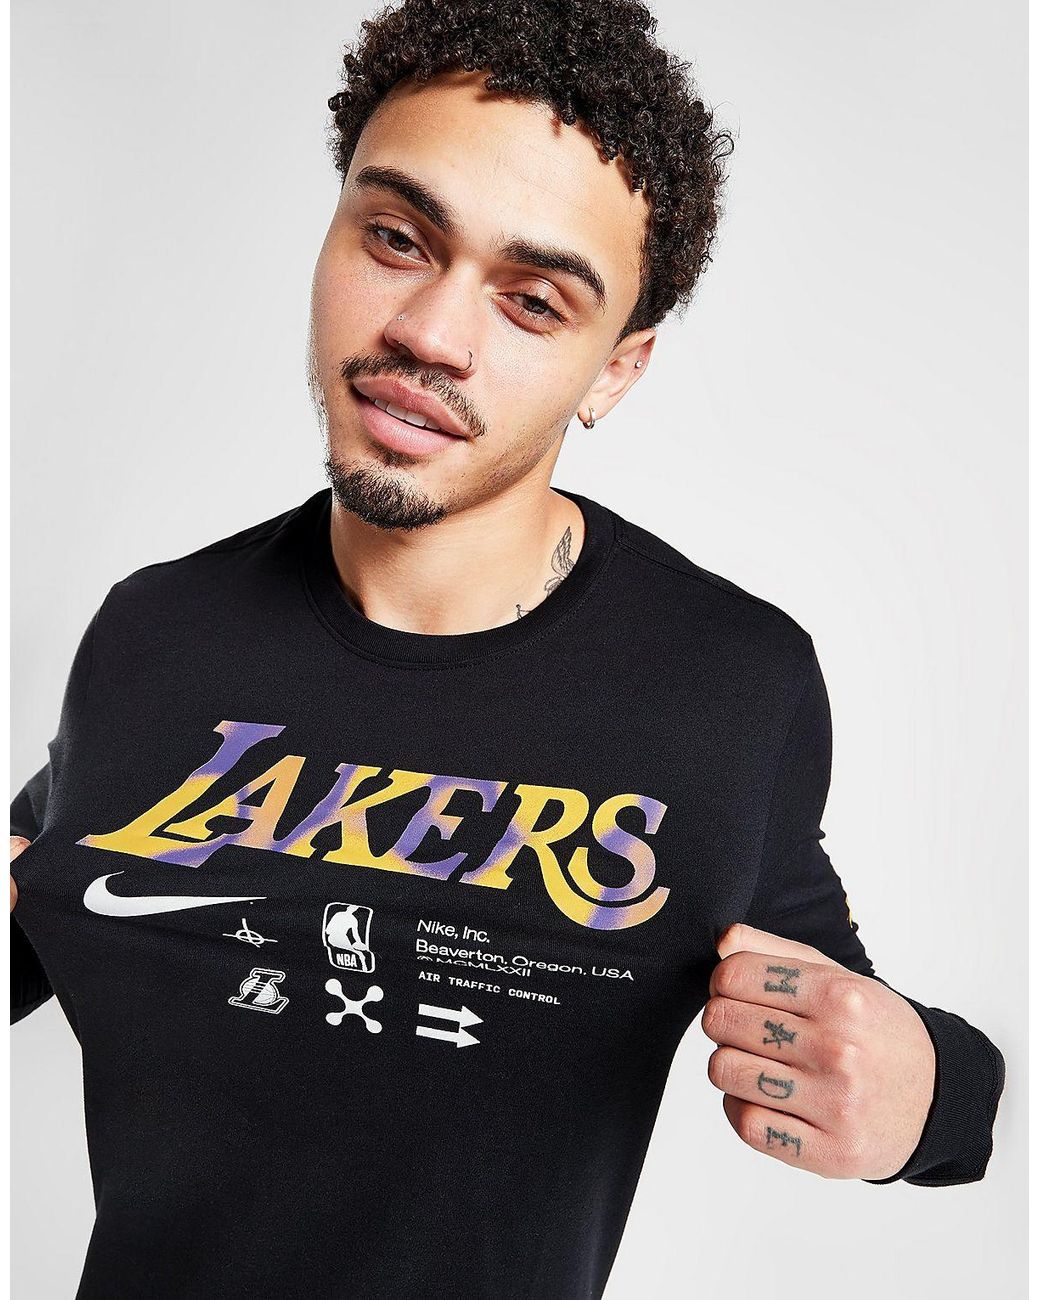 Nike Men's Brooklyn Nets Black Practice Long Sleeve T-Shirt